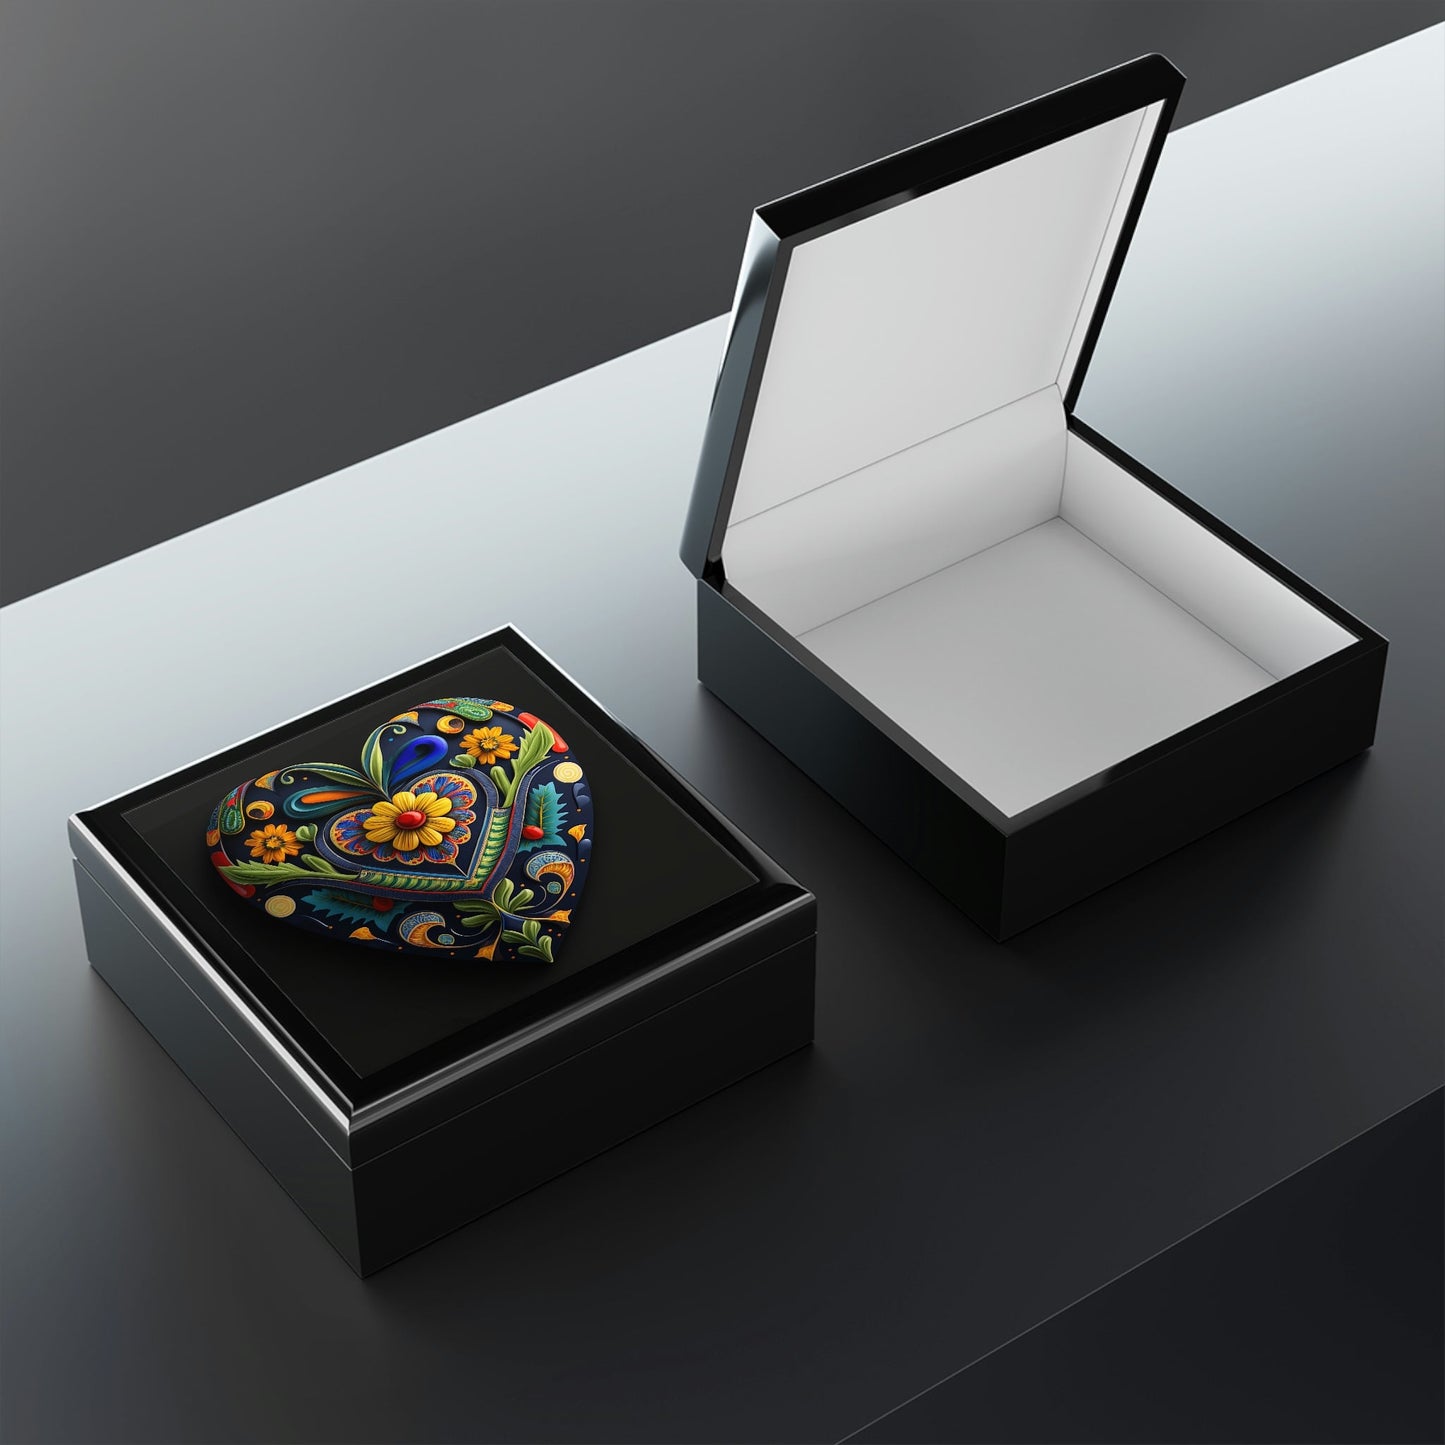 Talevera Heart Wood Keepsake Jewelry Box with Ceramic Tile Cover